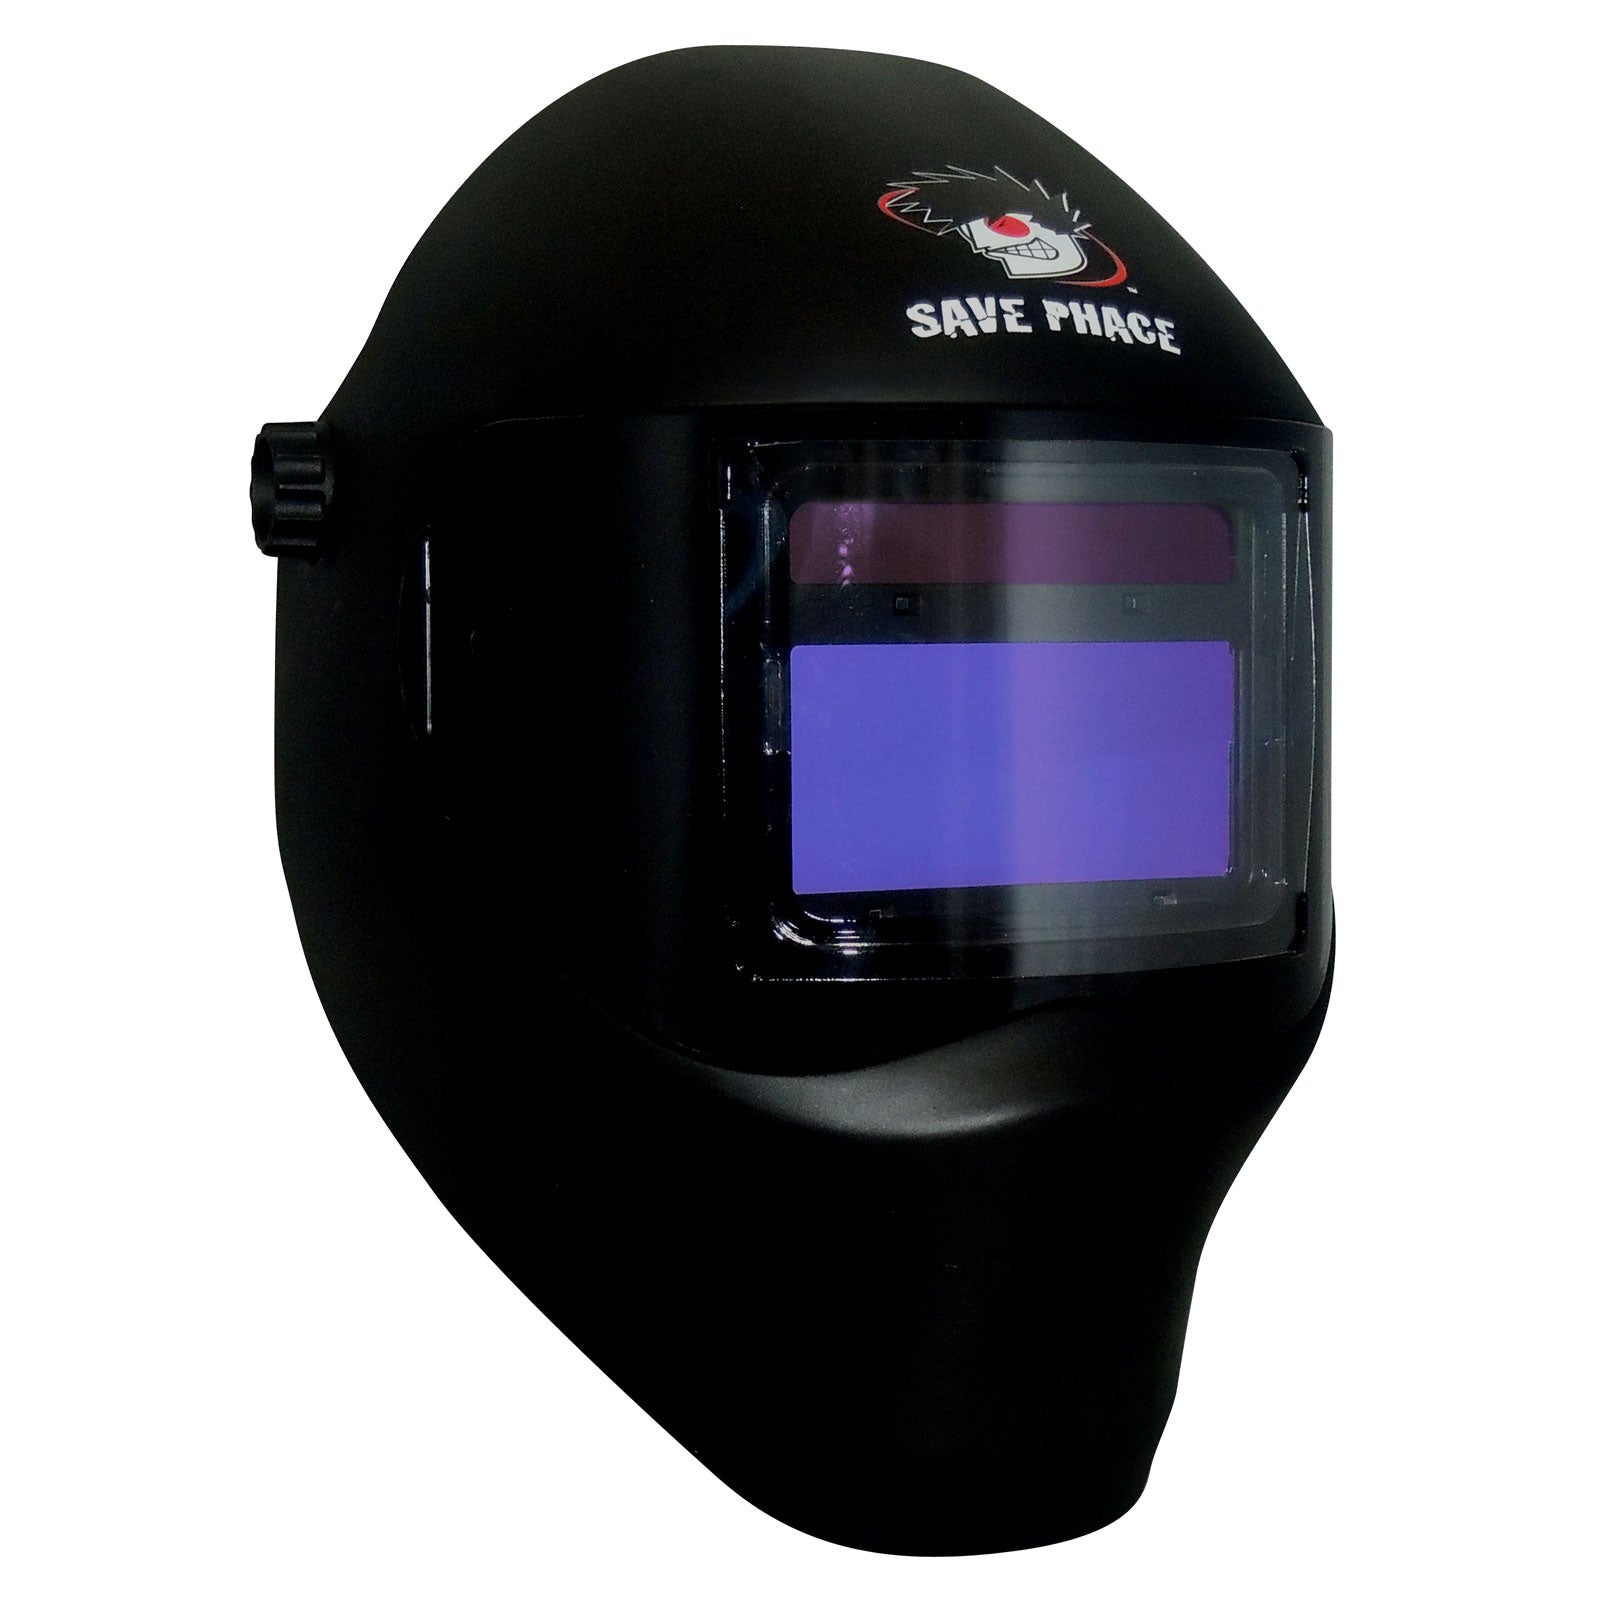 Save Phace MO3 RFP 4 Sensor Welding Helmet